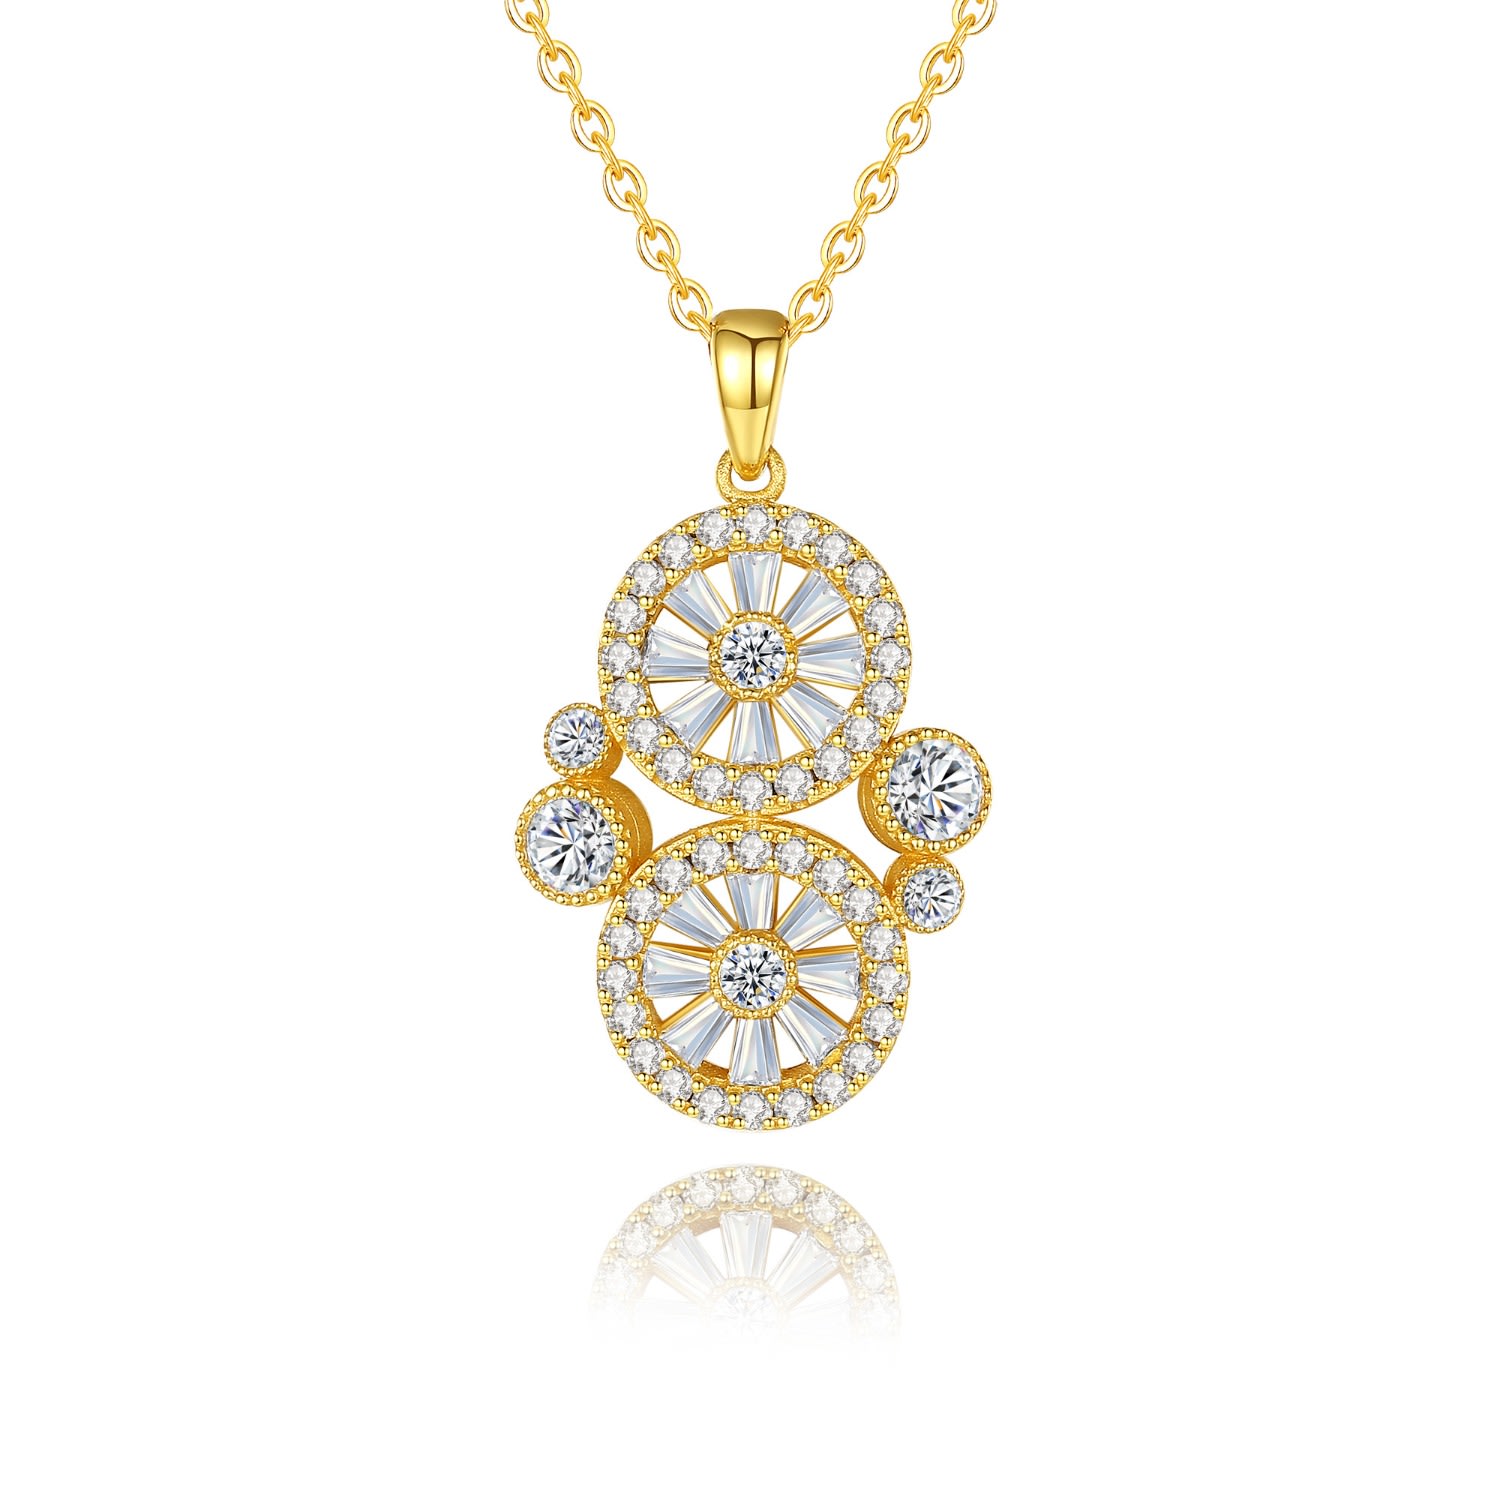 Shop Classicharms Women's Gold Wheel Of Fortune Pendant Necklace